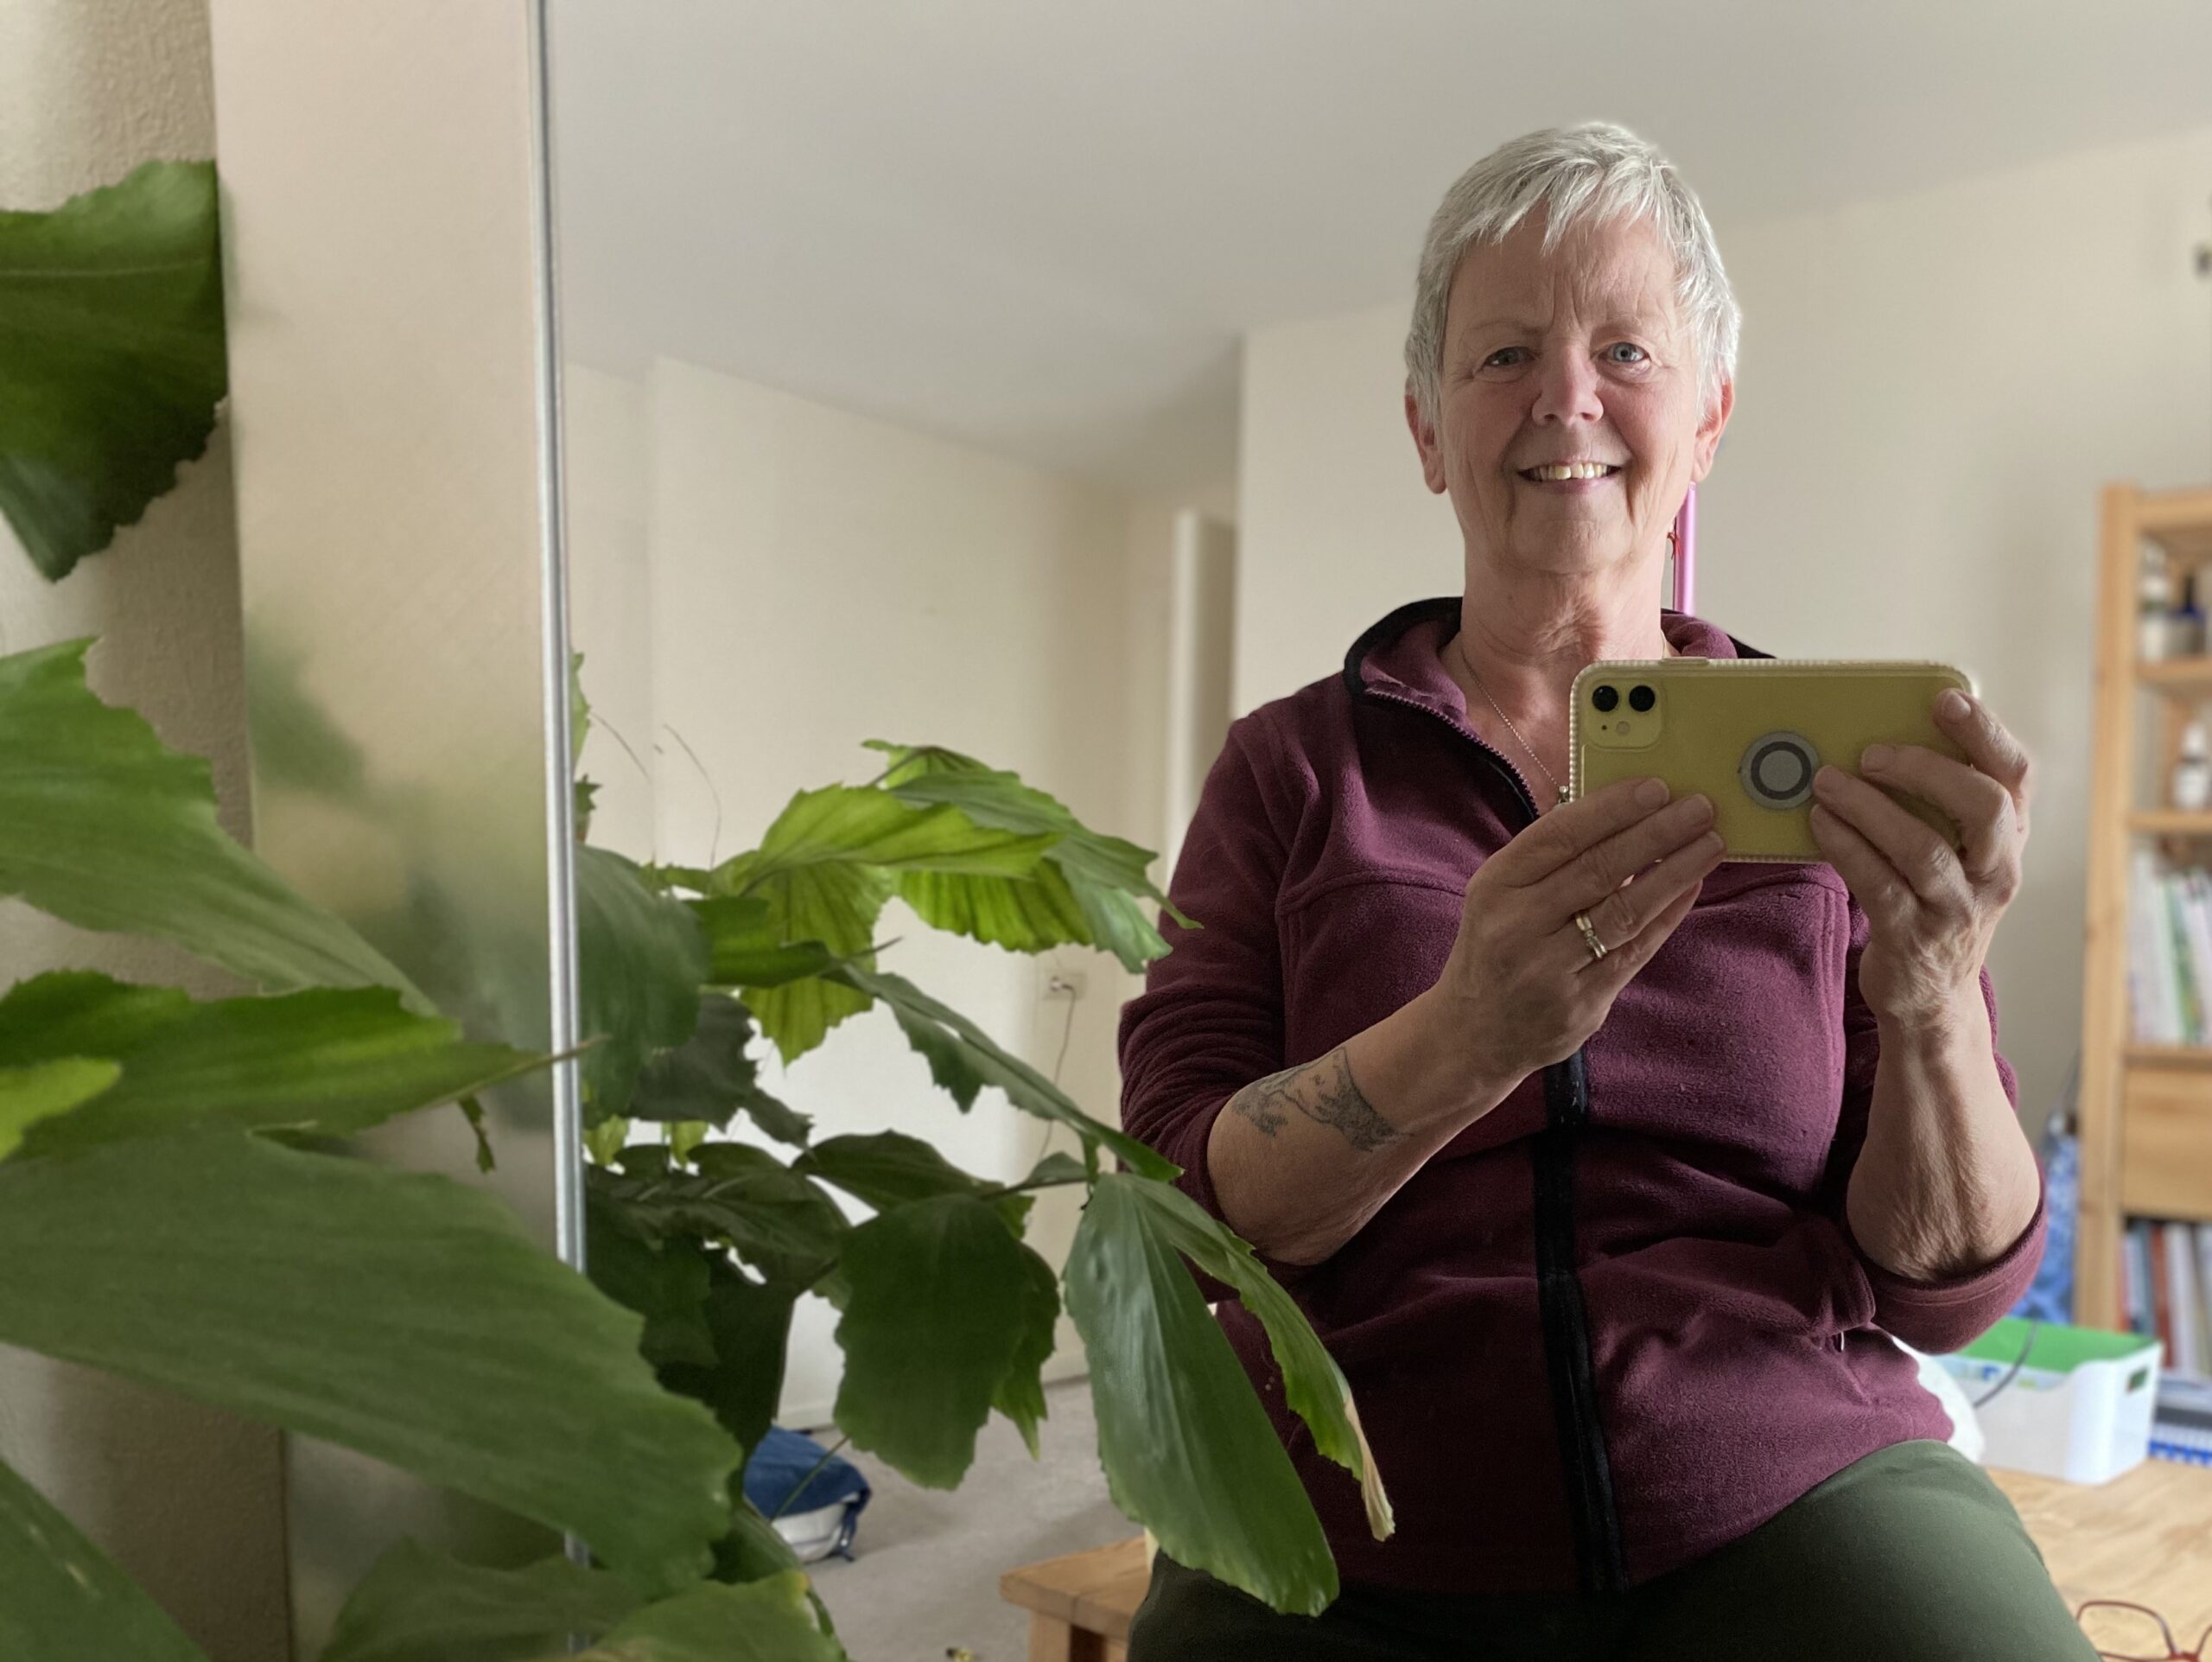 vrouw, 60-er, maakt selfie via spiegel, lachend